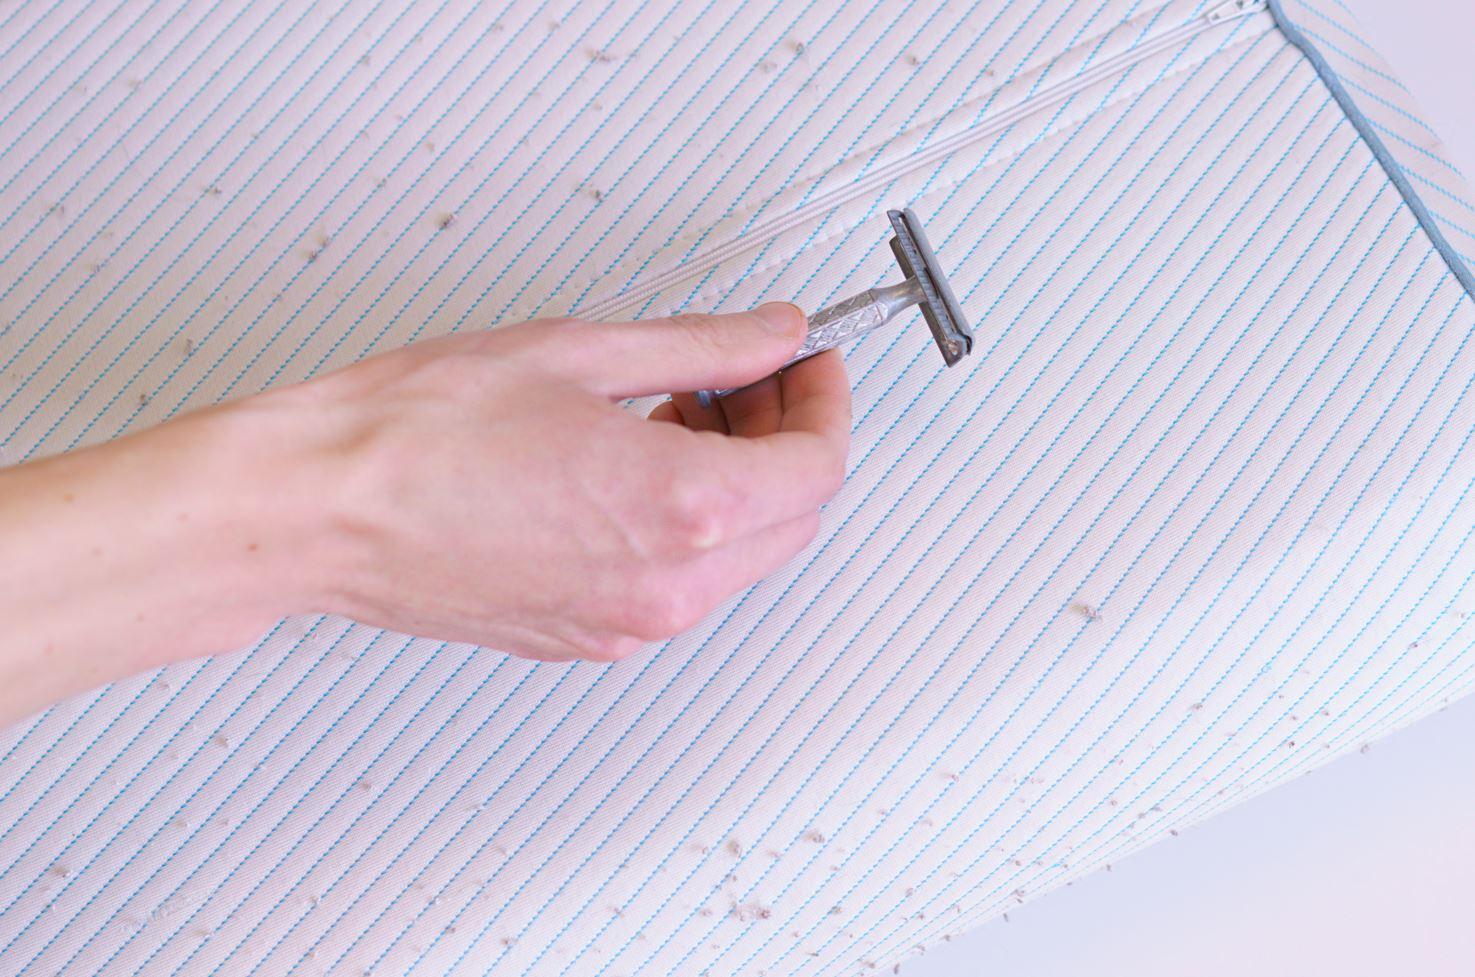 man using razor to remove lint from white mattress